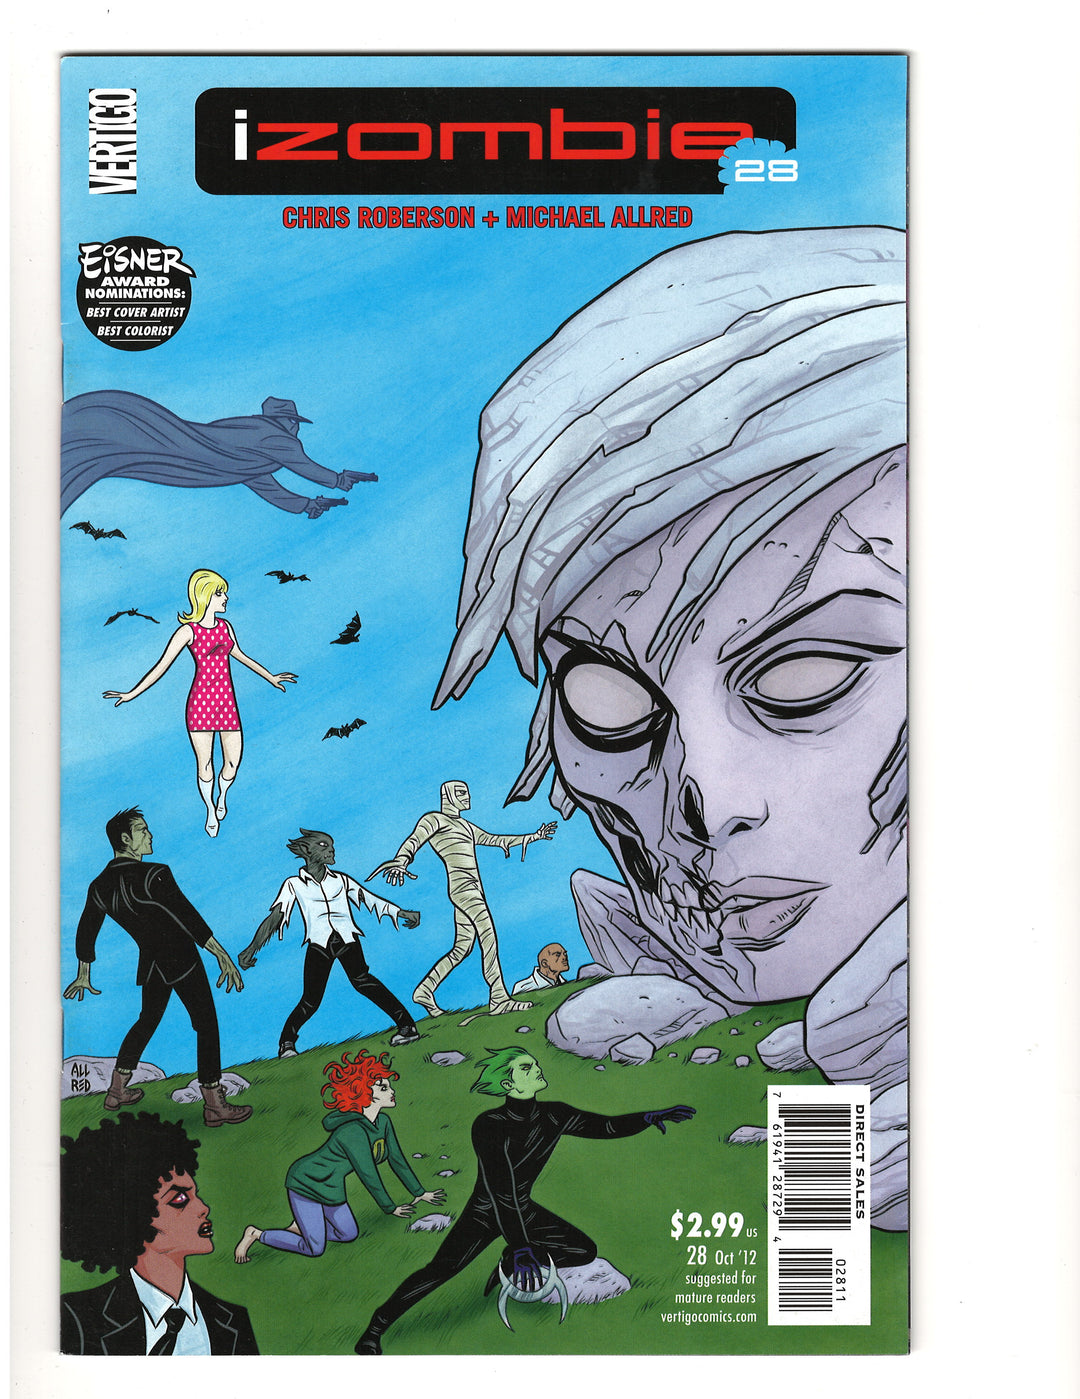 28 iZombie Vertigo Comic Books #1-28 COMPLETE SERIES RUN (Mature) OXL-01